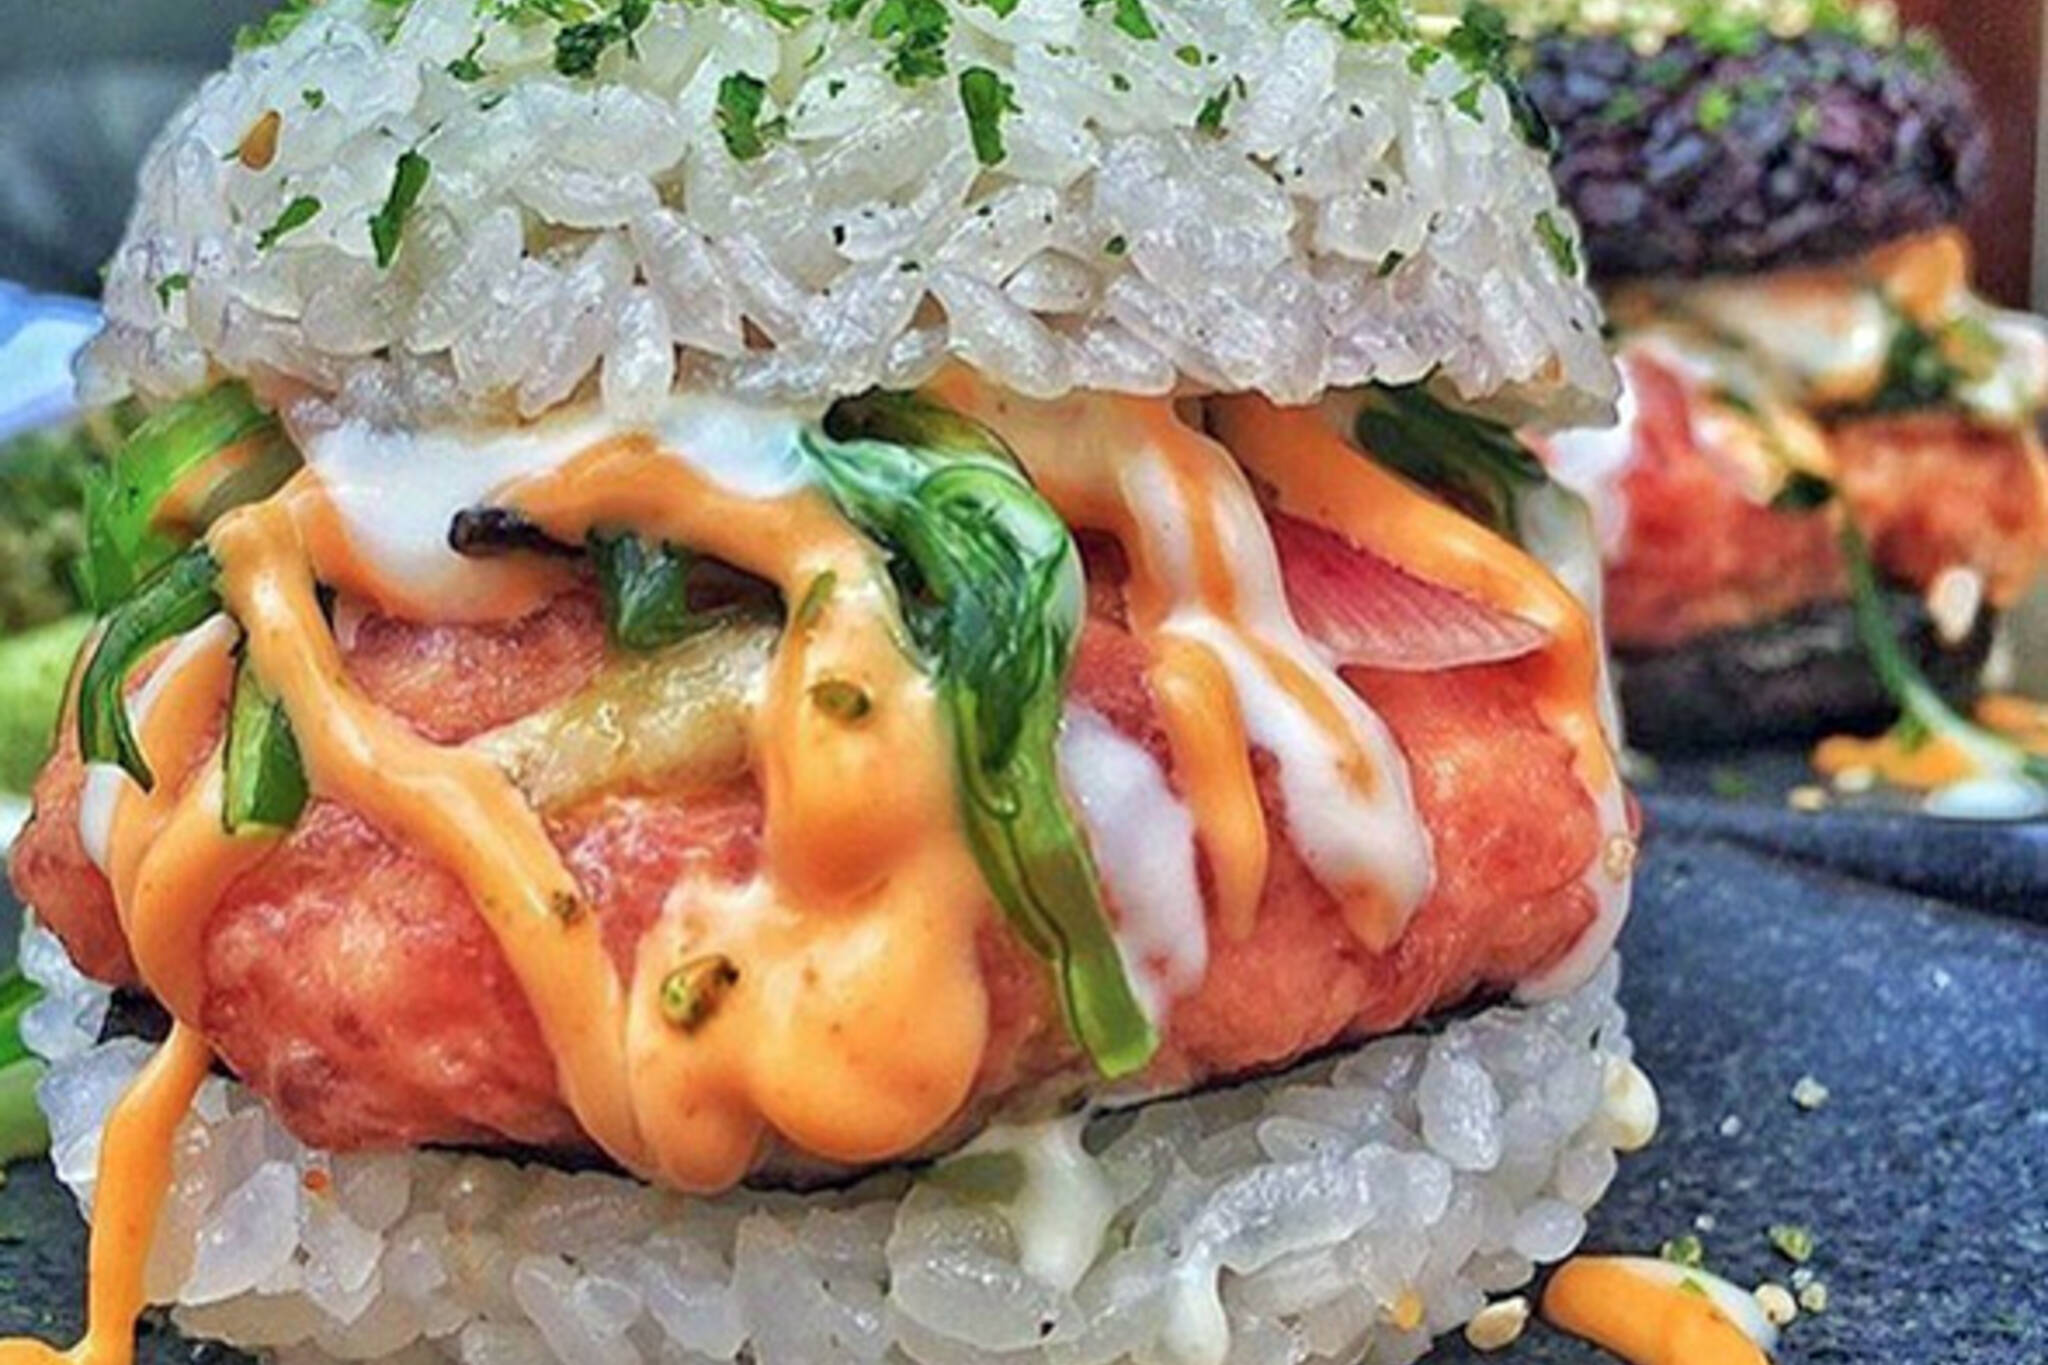 sushi burger